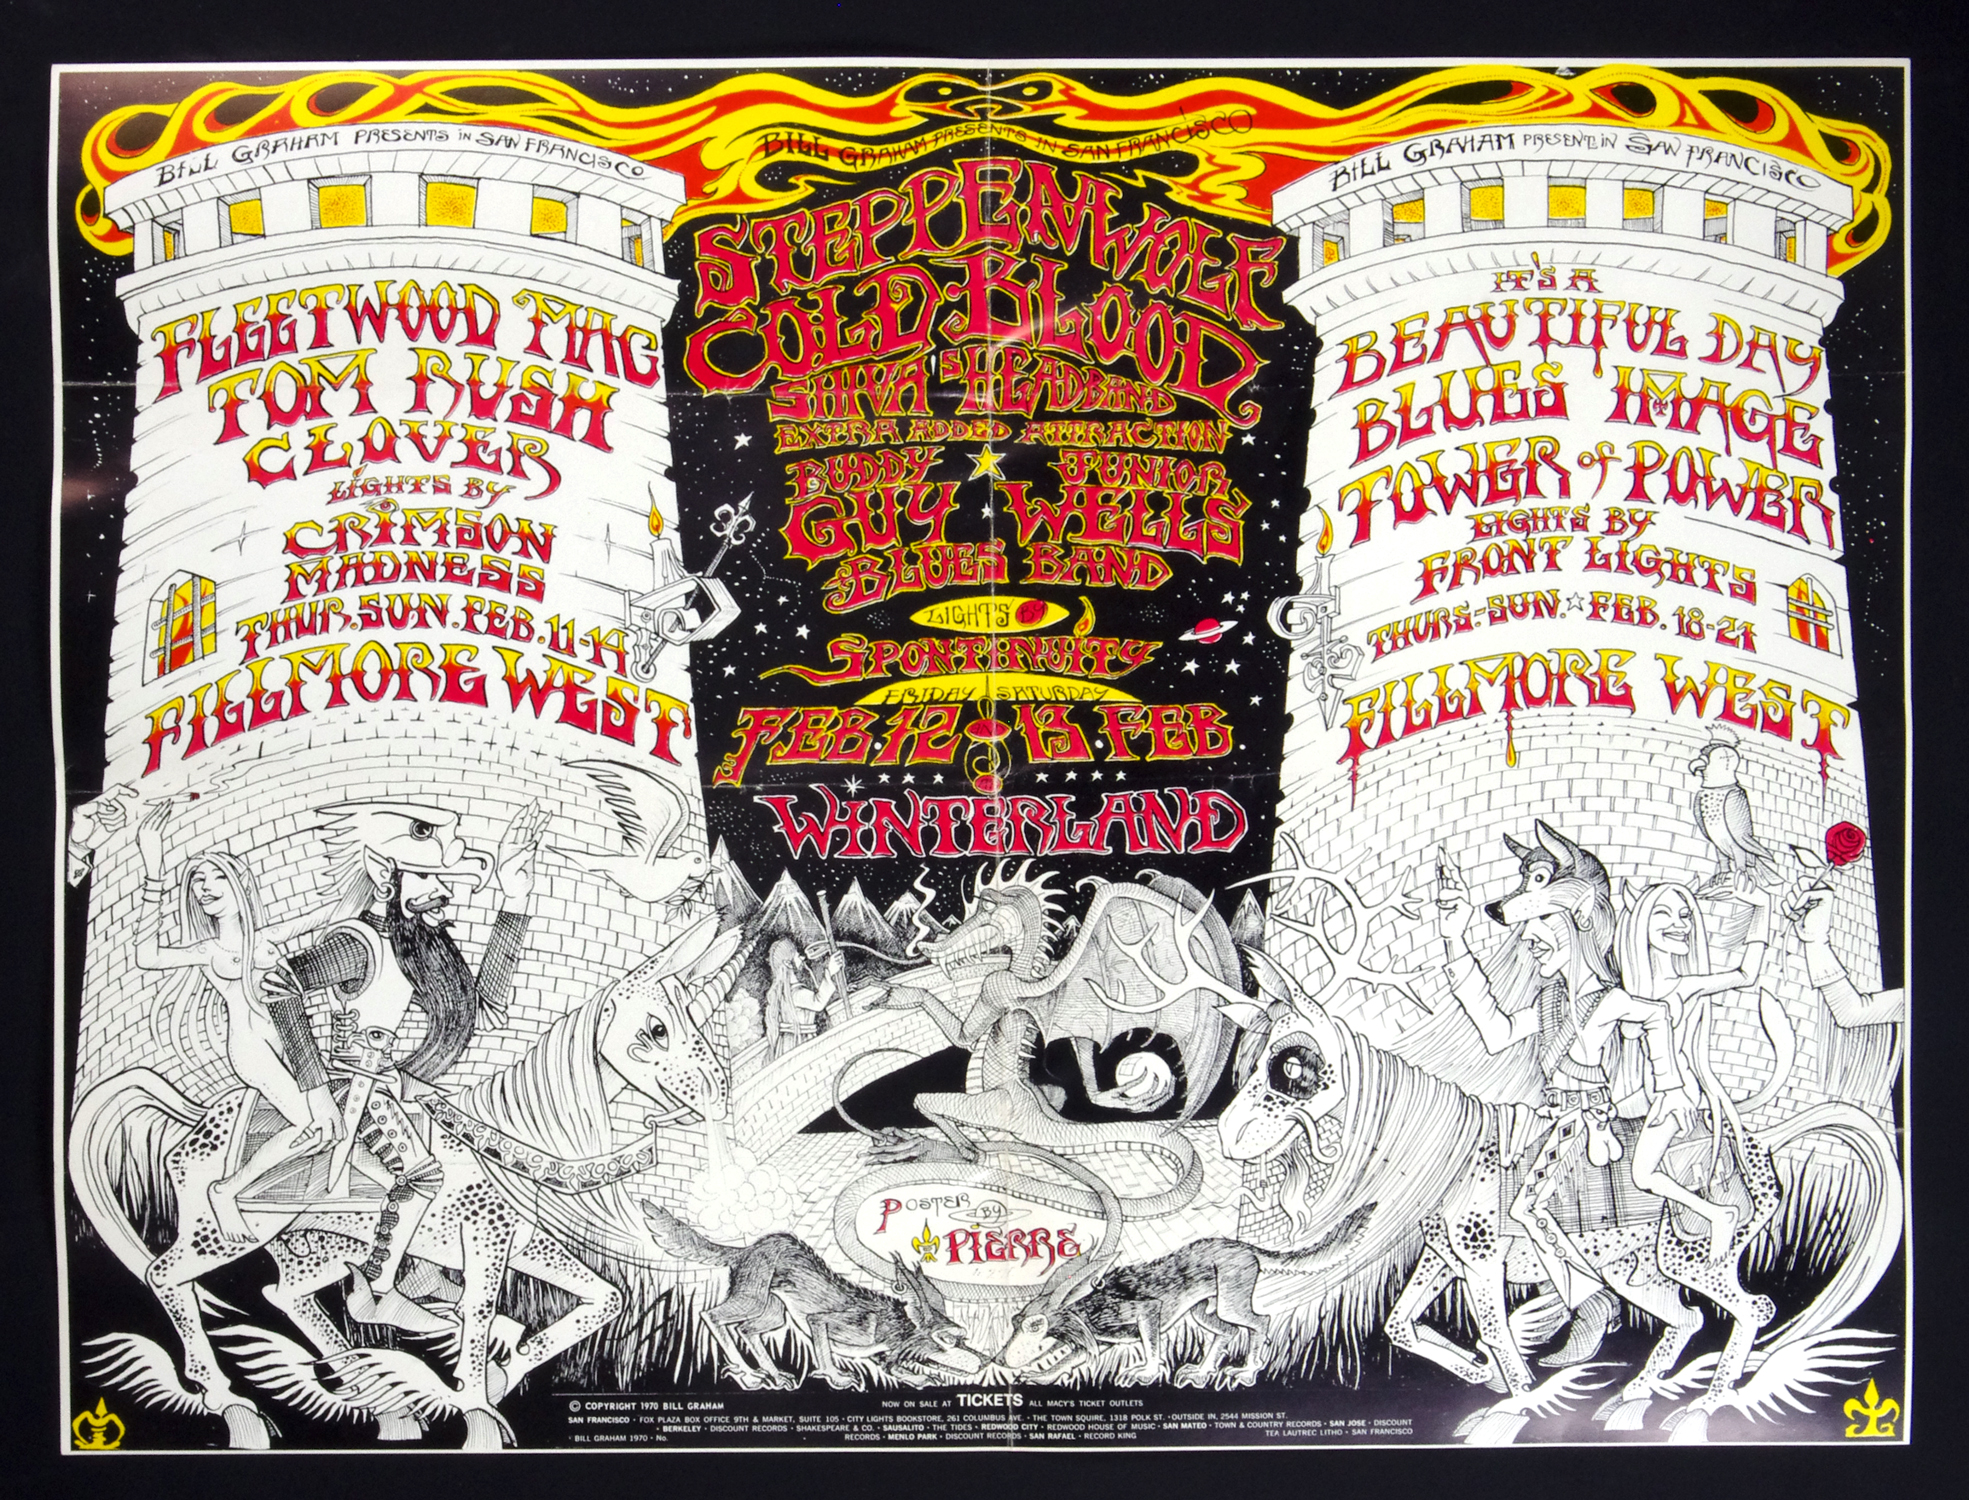 BG 270 Poster Fleetwood Mac Buddy Guy 1971 Feb 11